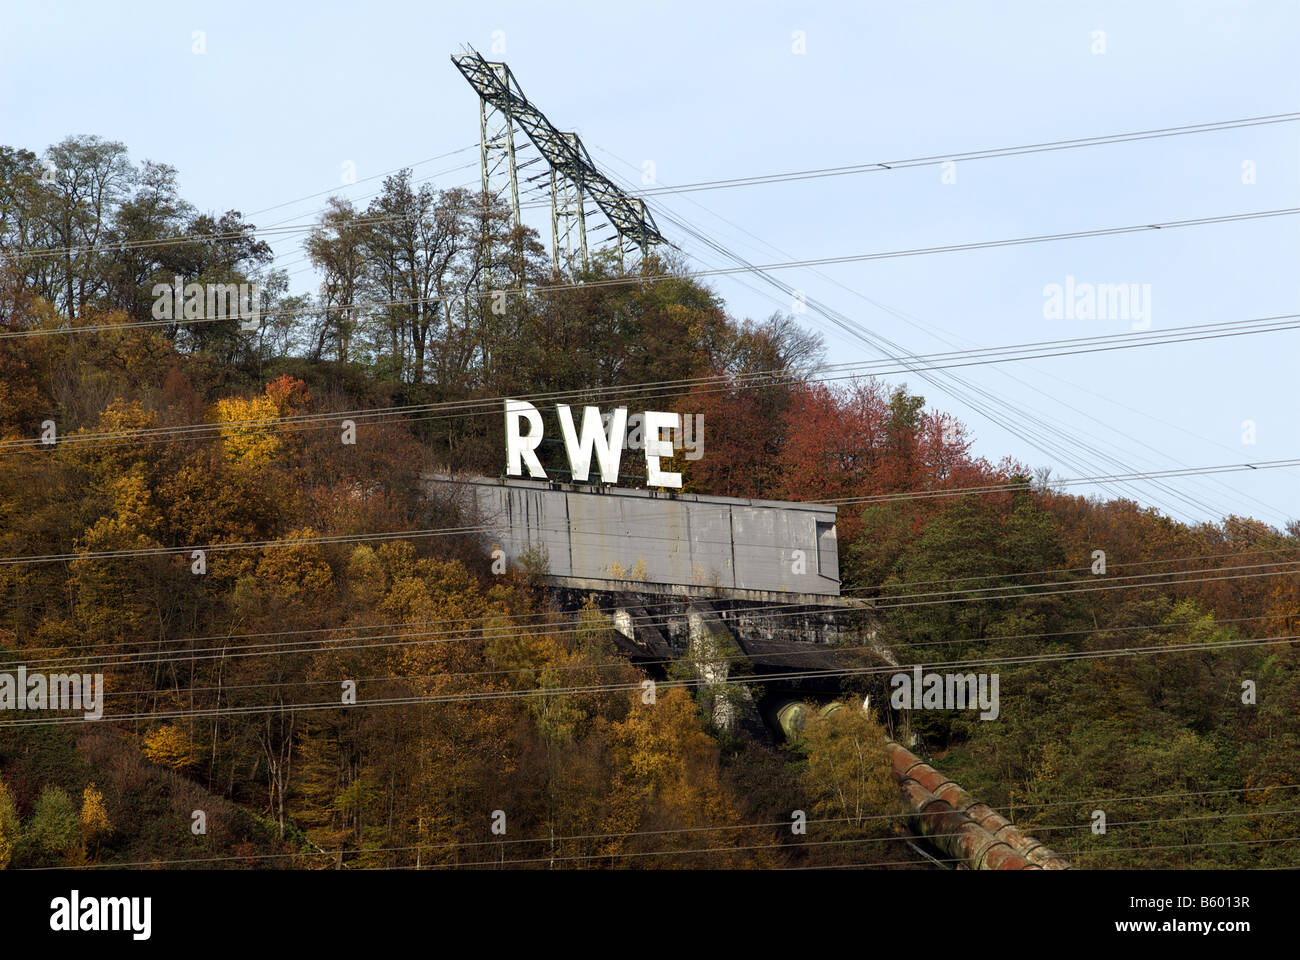 RWE power station, Germany. Stock Photo